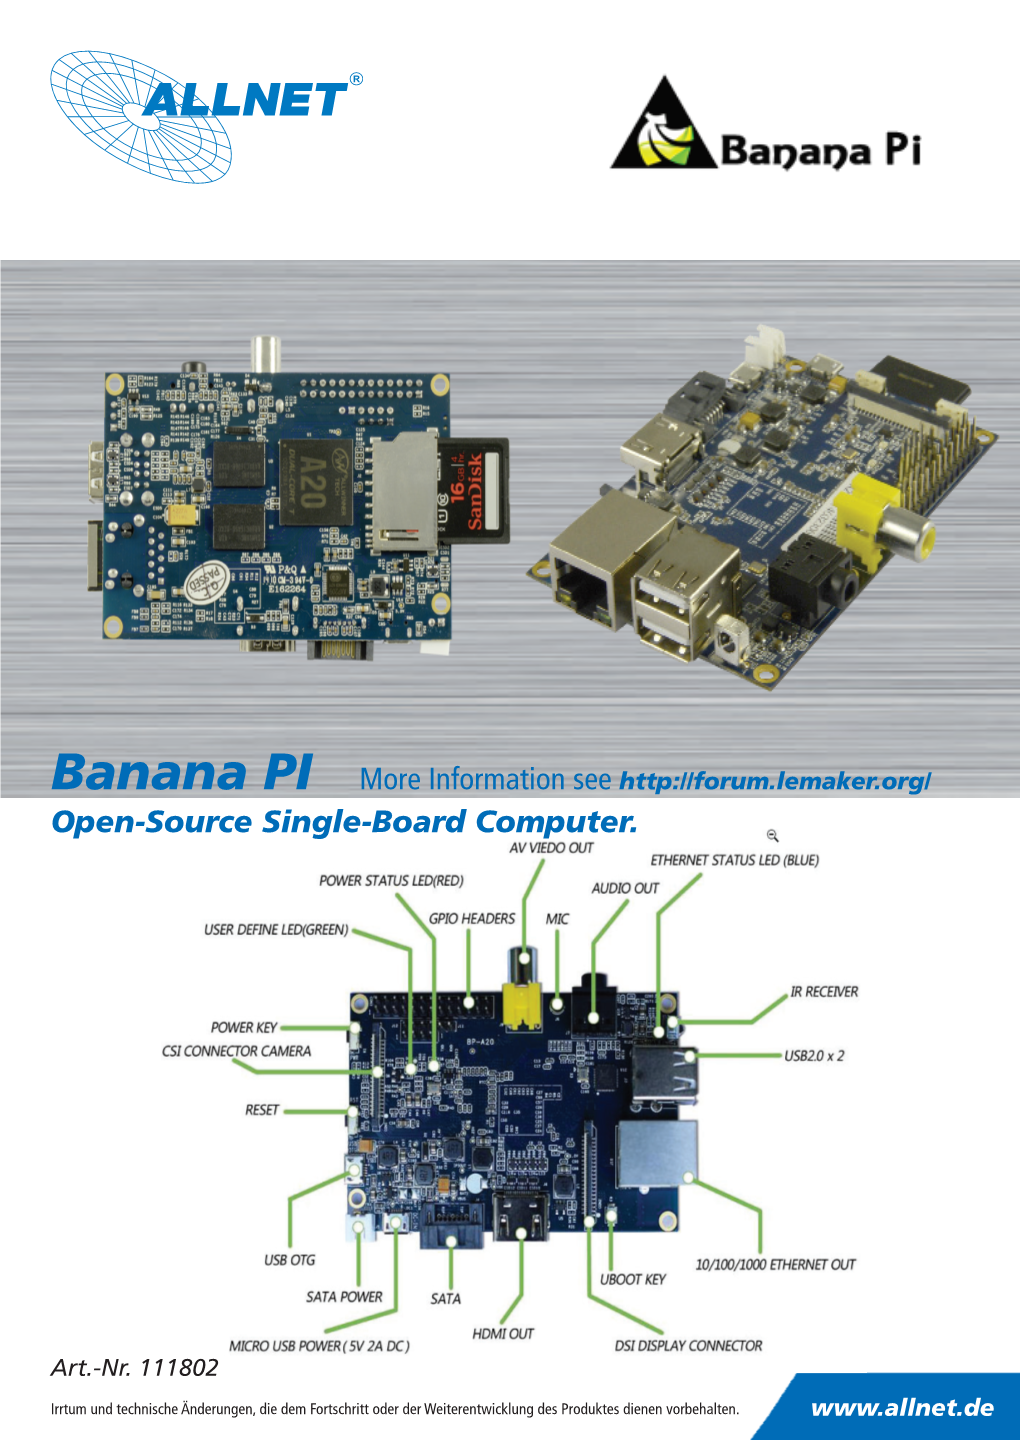 Open-Source Single-Board Computer